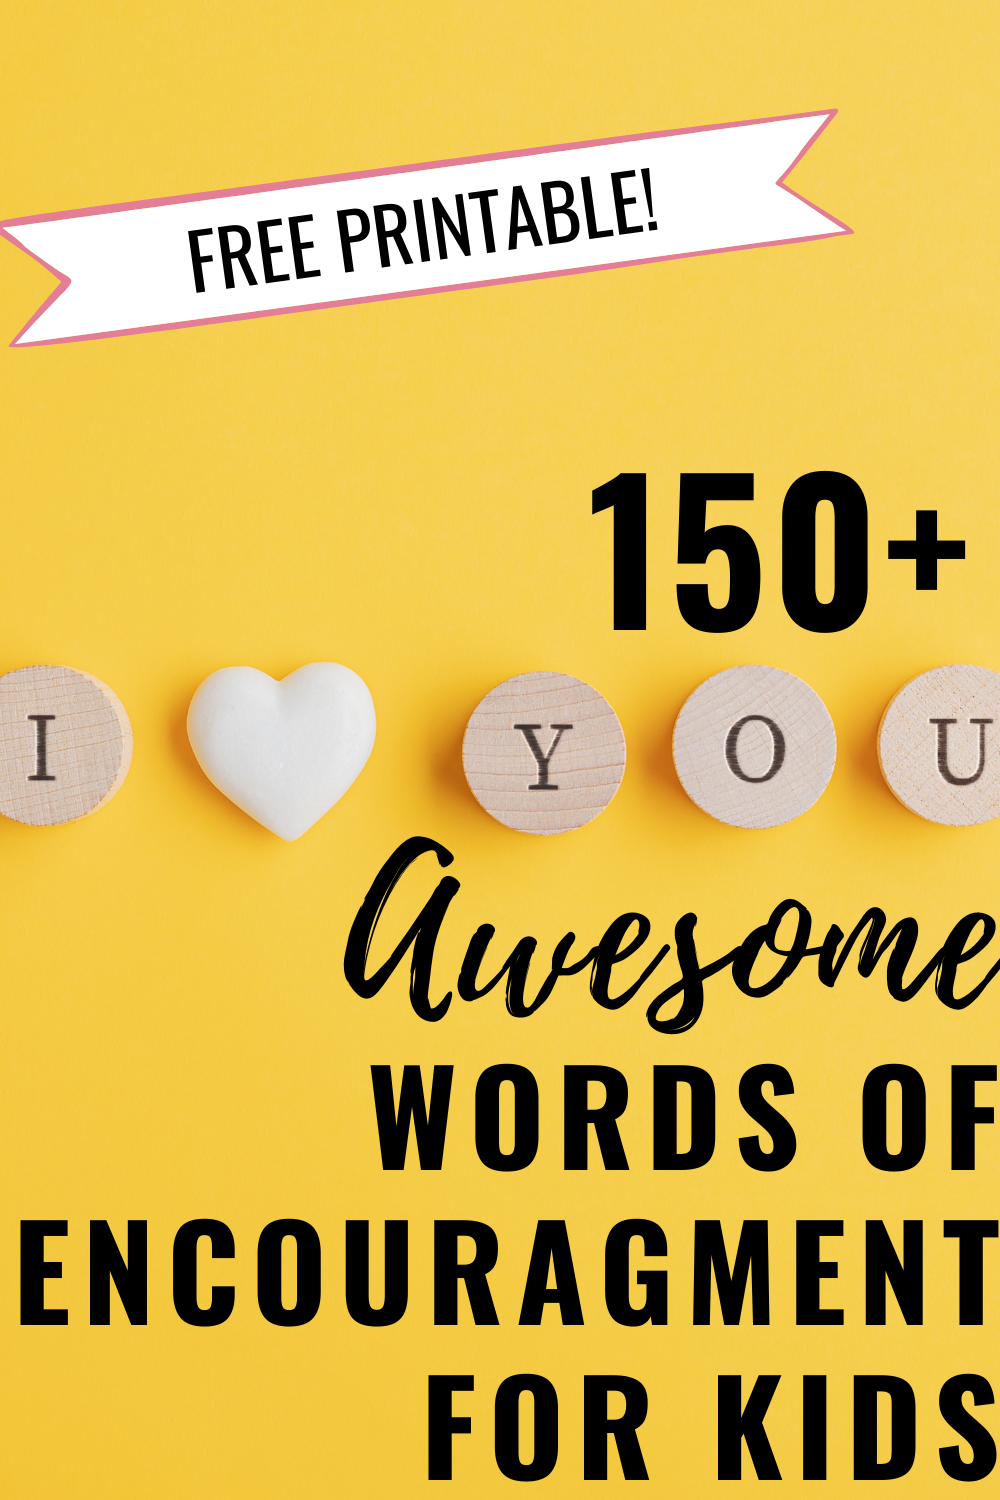 150+ Words of Encouragement for Kids